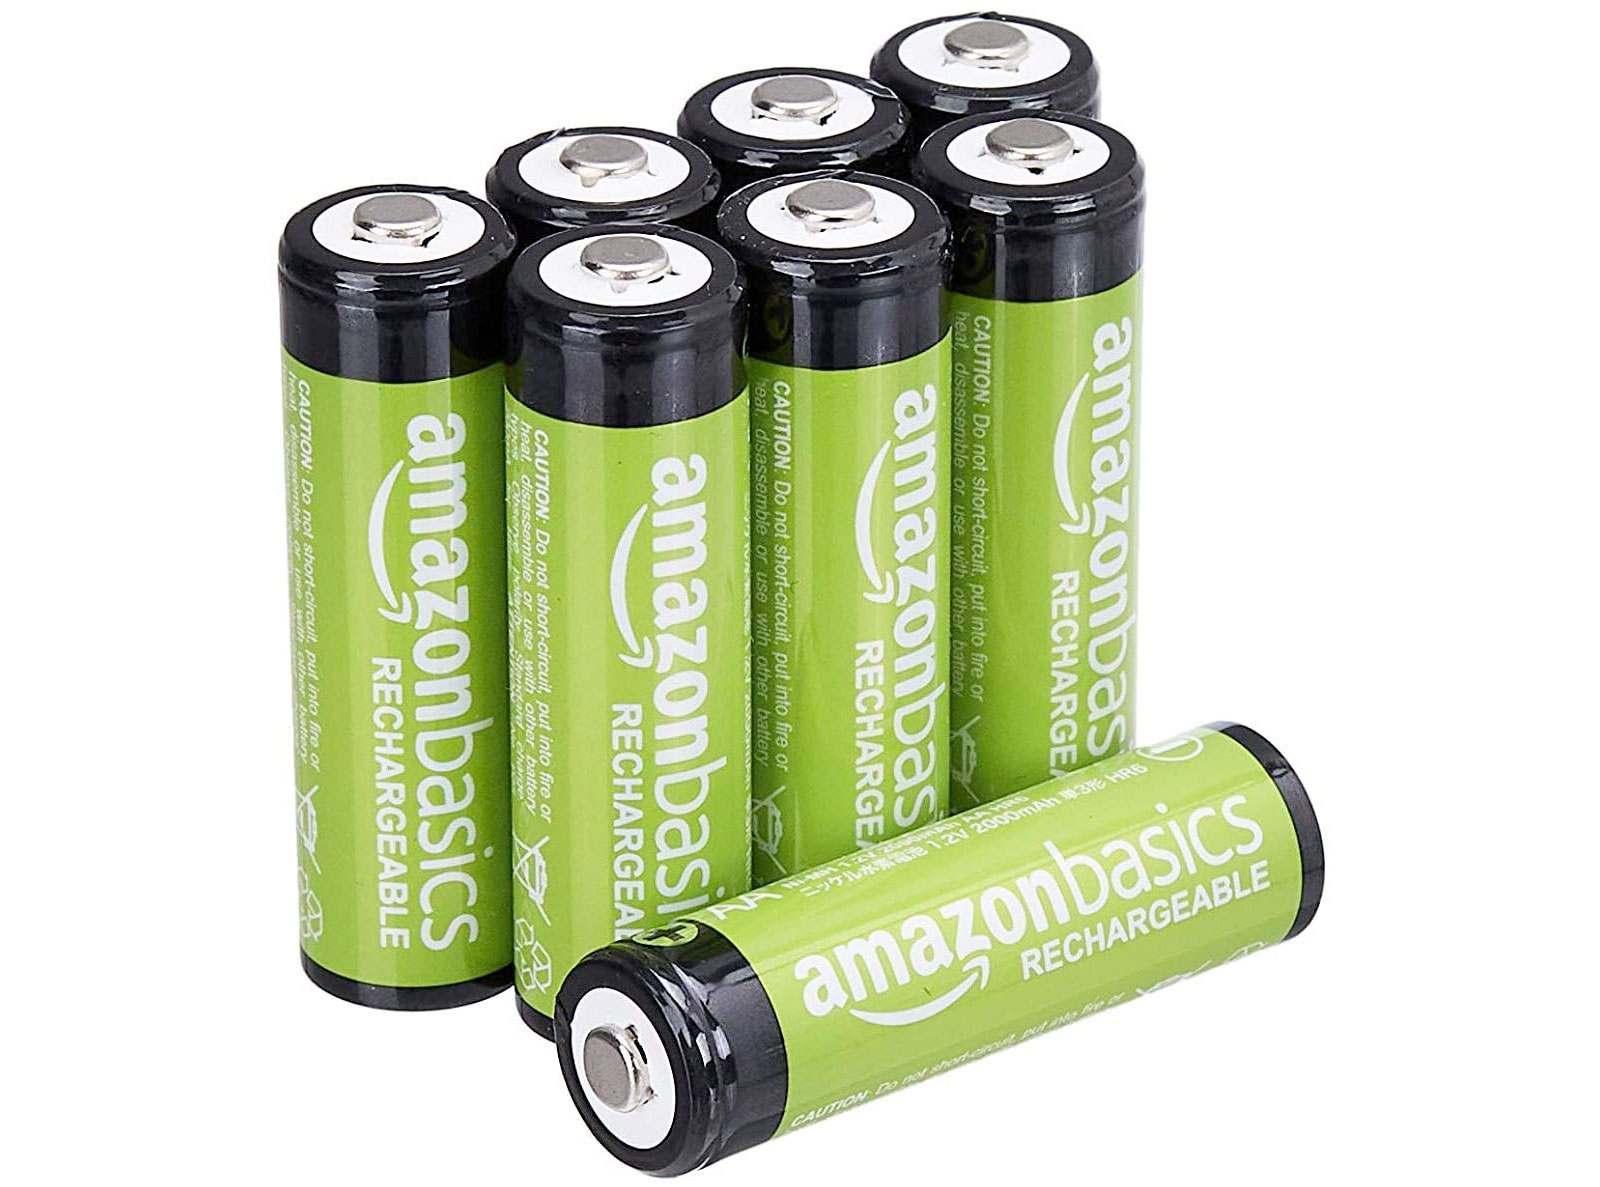 Amazon：AmazonBasics AA Rechargeable Batteries (8-Pack)只賣$15.42(只限Amazon Prime會員)